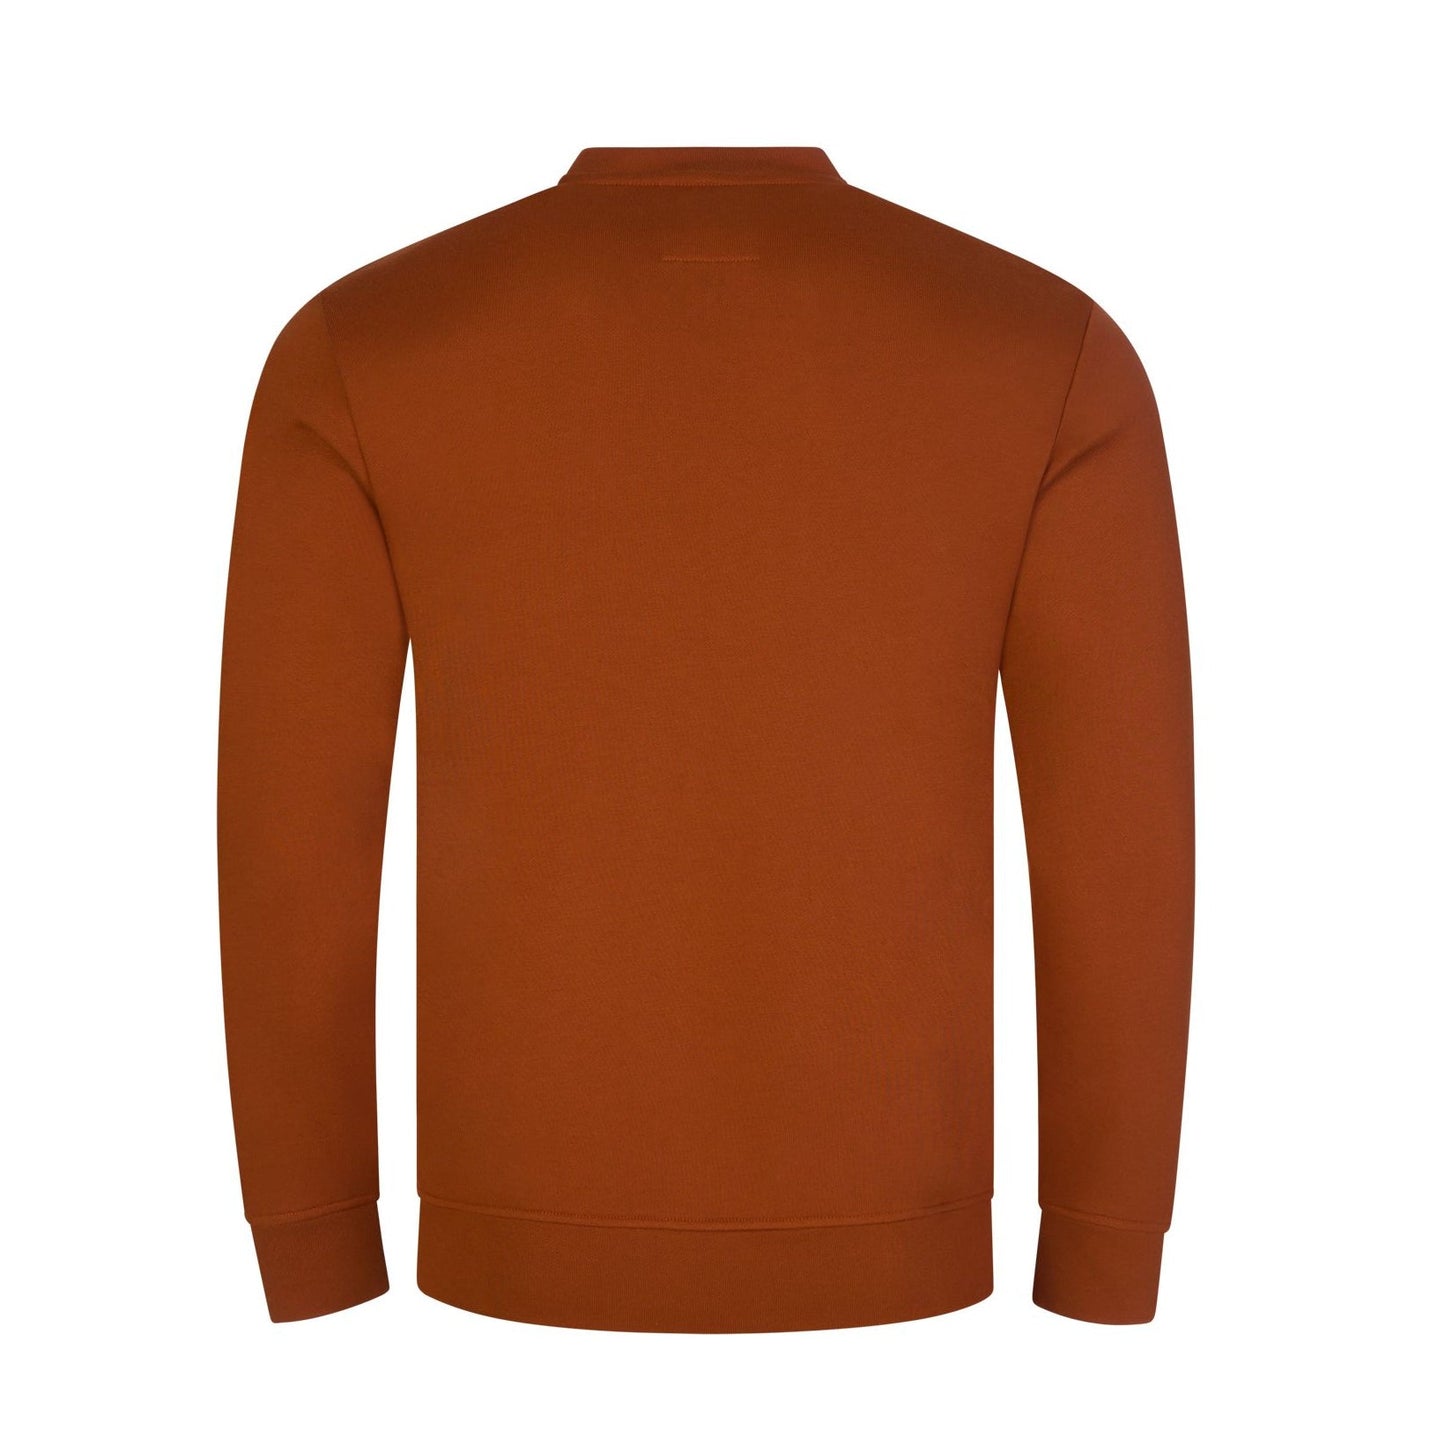 Emporio Armani 8N1MR6 Sweatshirt - 257 Ginger - Escape Menswear